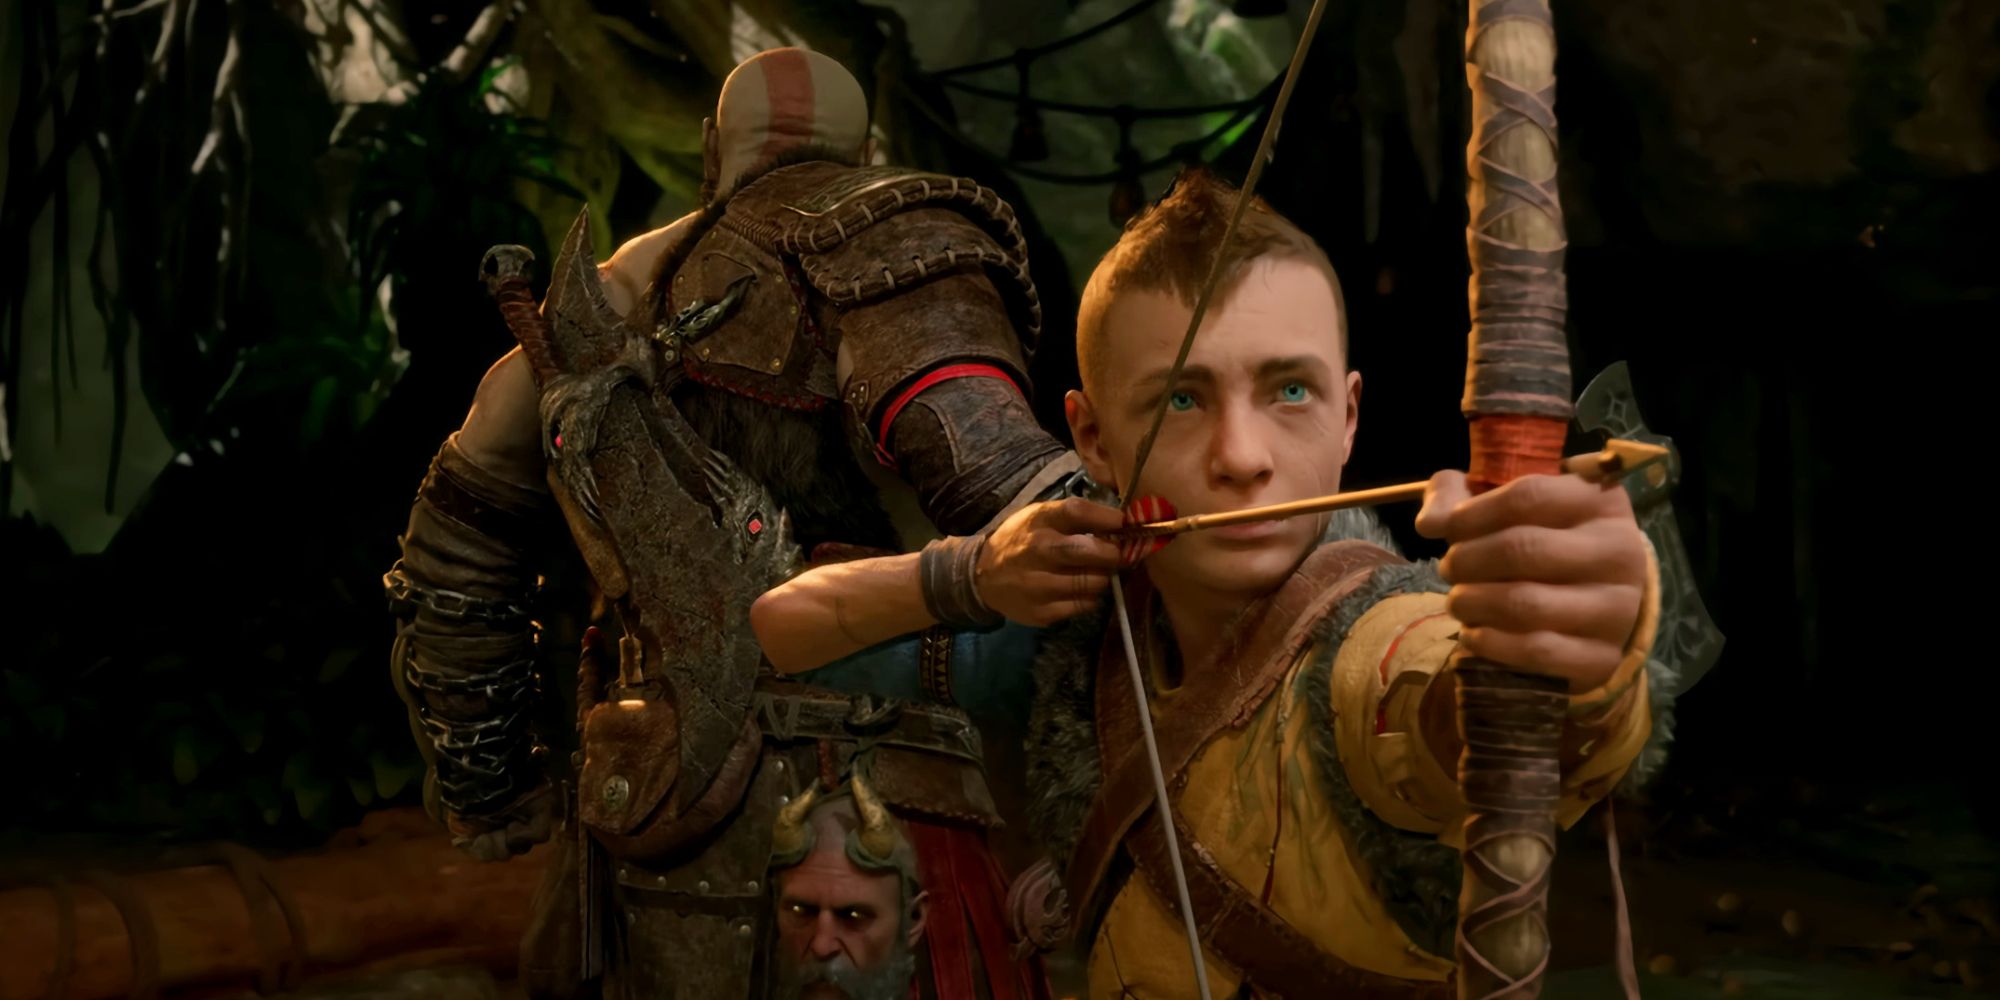 Atreus drawing an arrow with the Talon Bow in God of War Ragnarok.